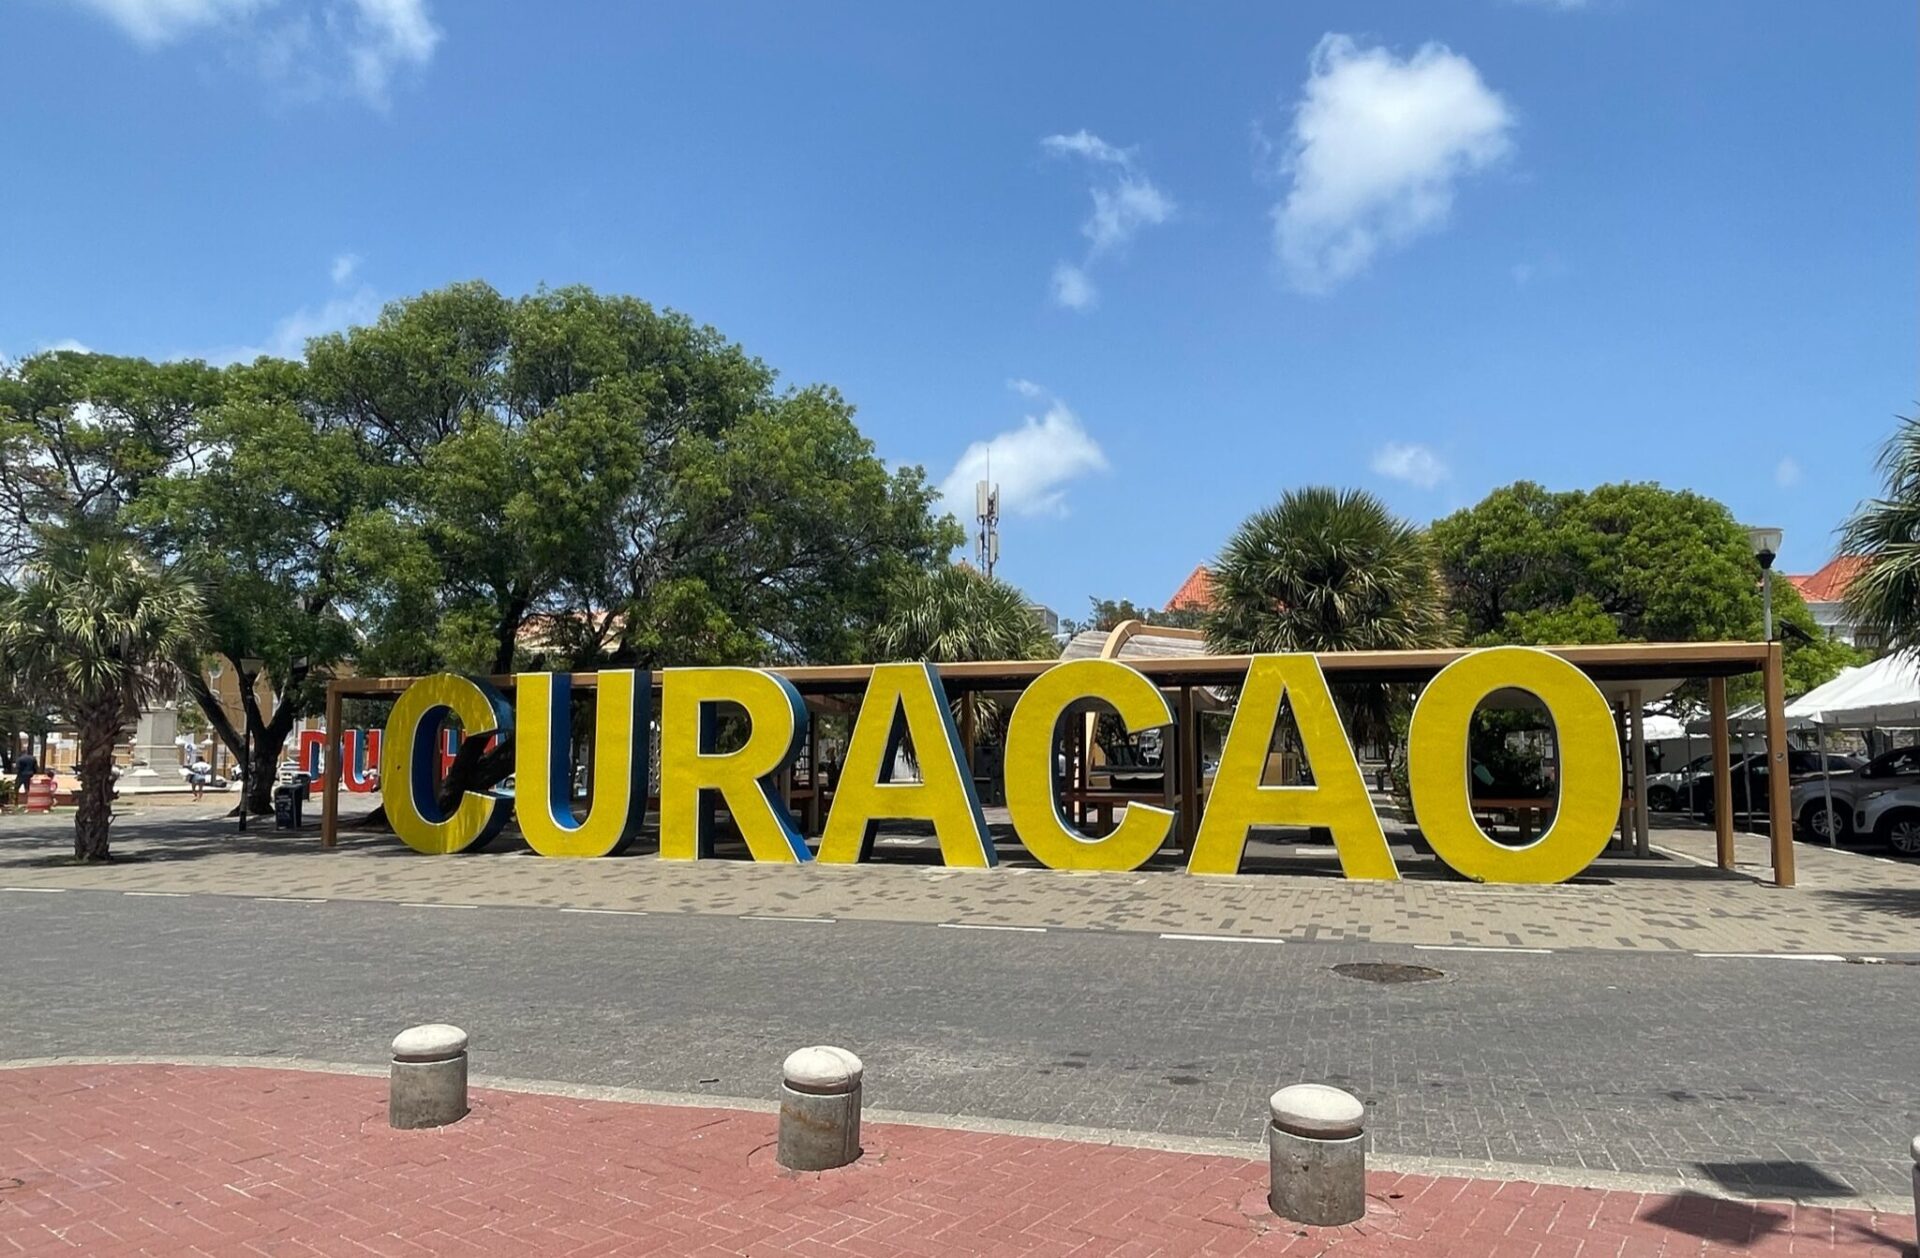 Curacao - Punda - Willemstad - Sign - Wilhelminaplein - Dutch Caribbean, The Netherlands Antilles - exploringcuracao.com